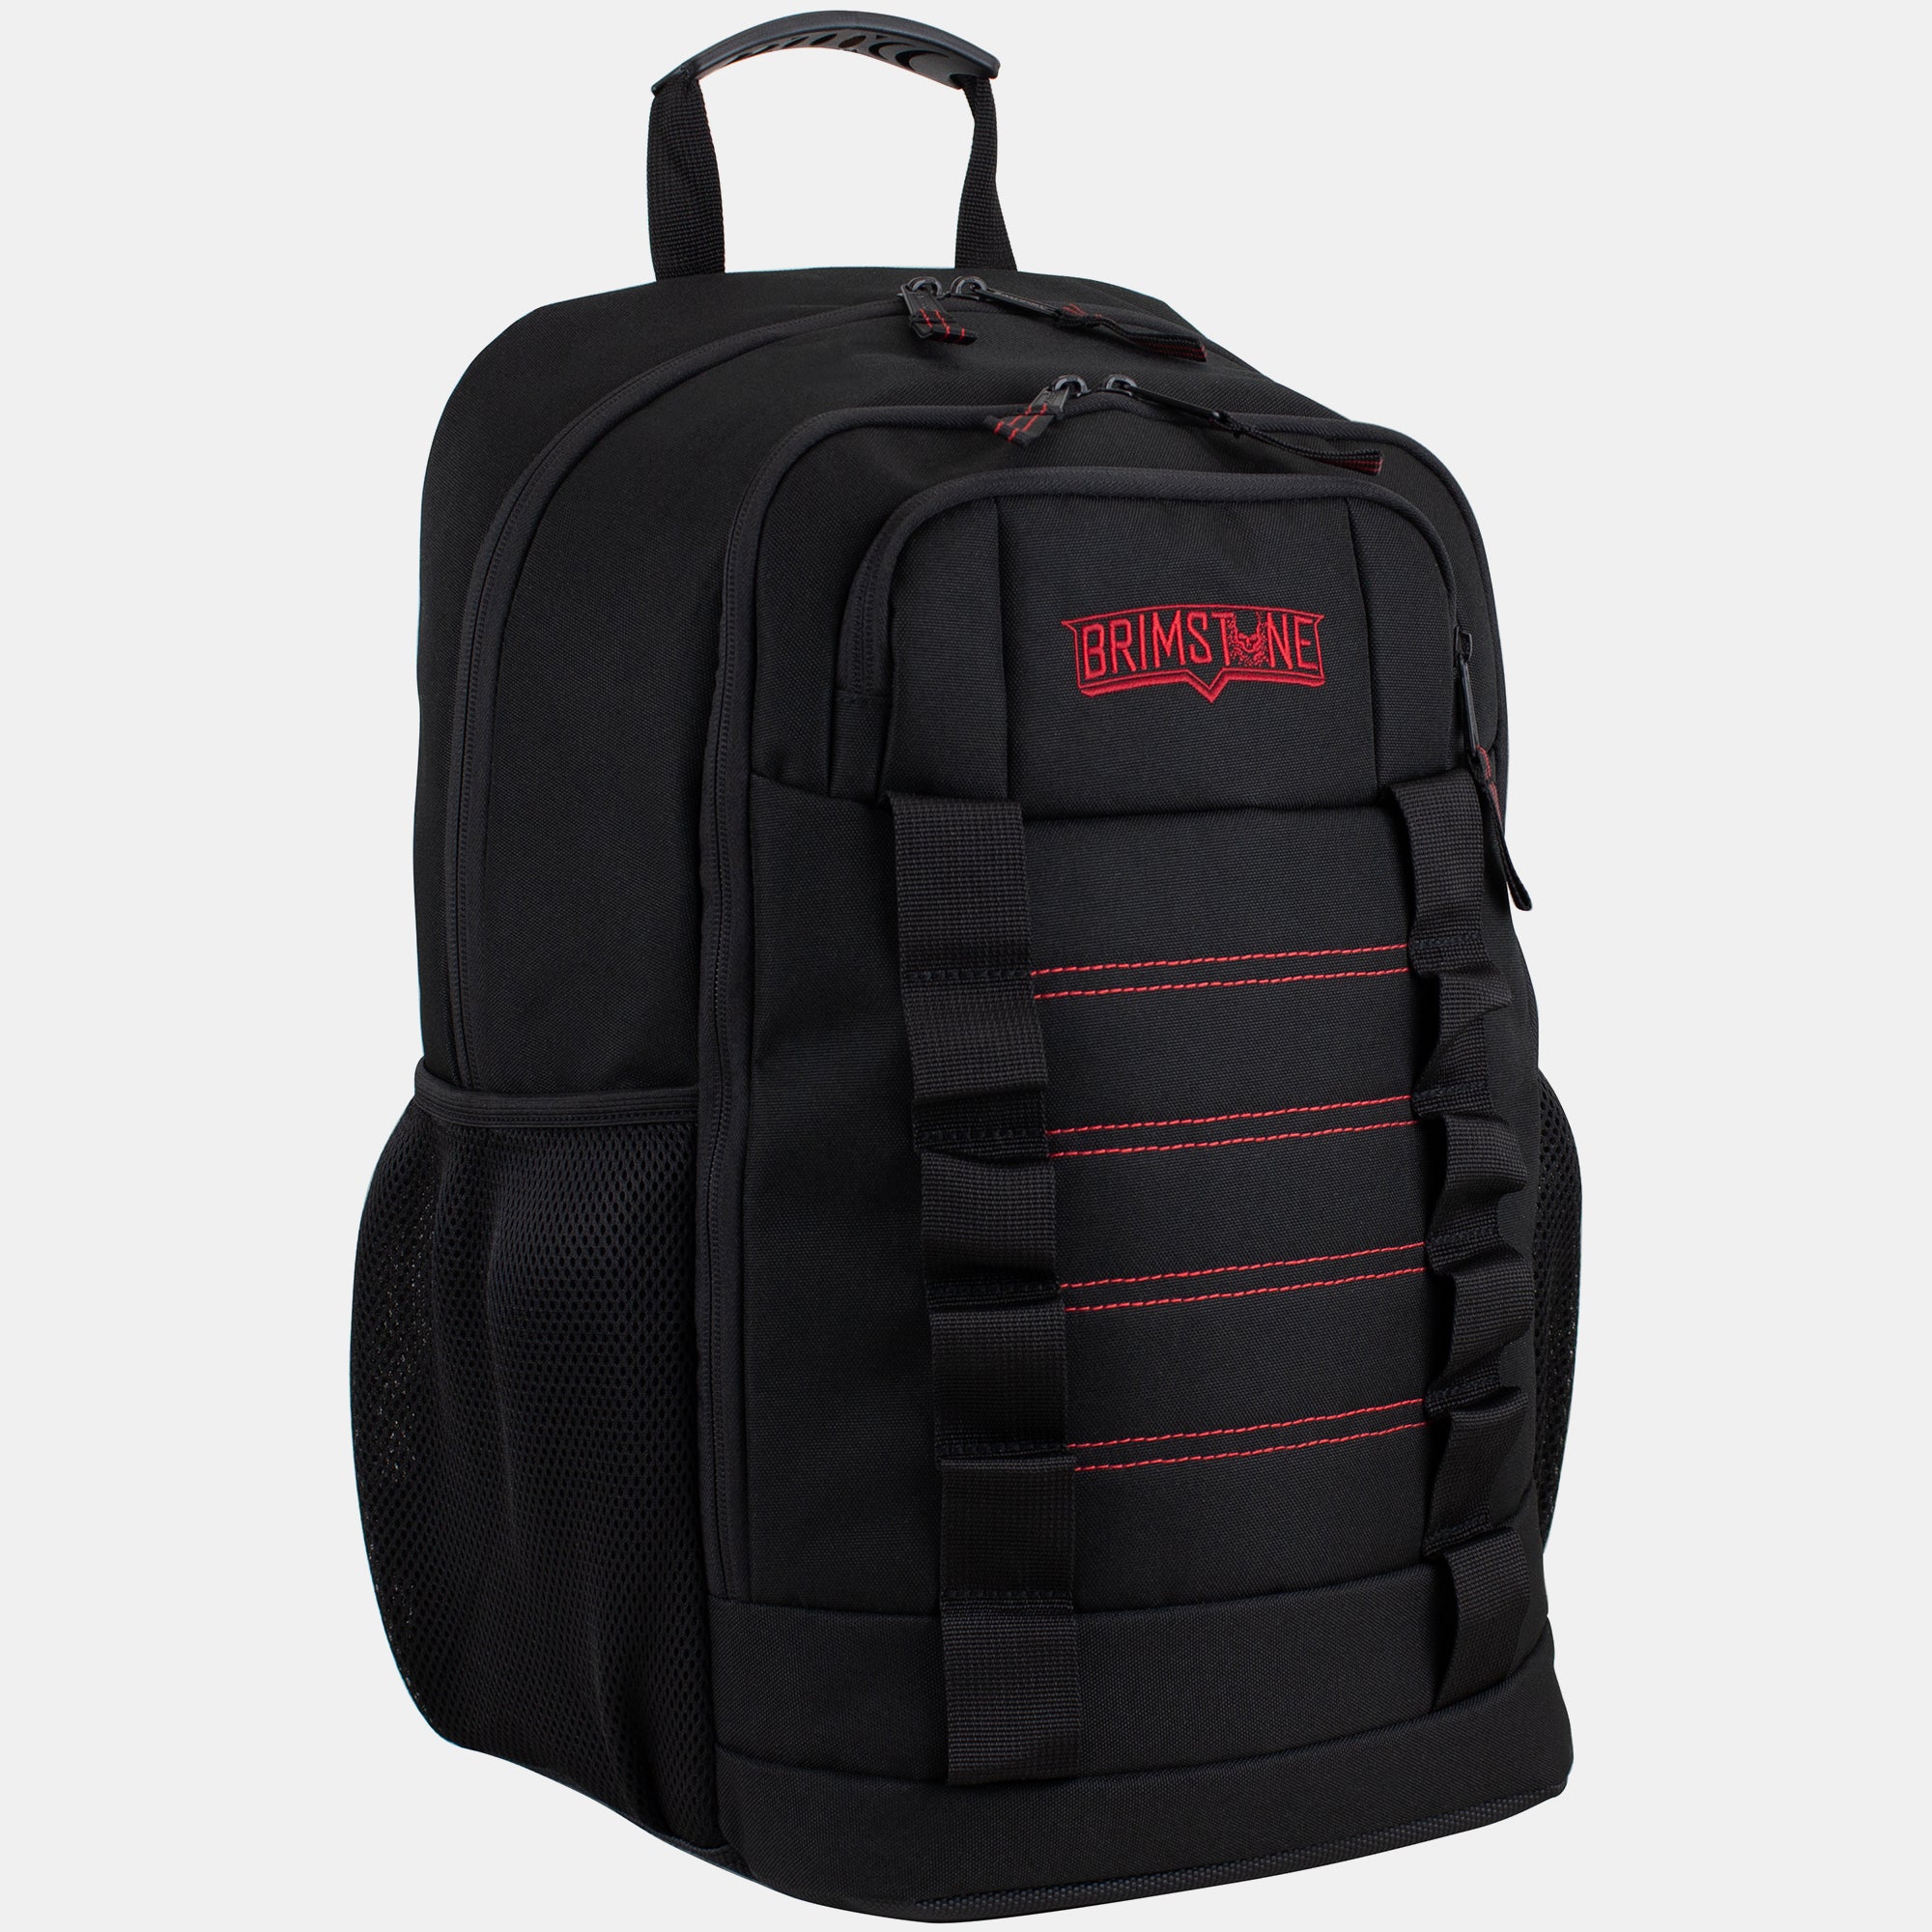 Brimstone "Infinite Red" Backpack